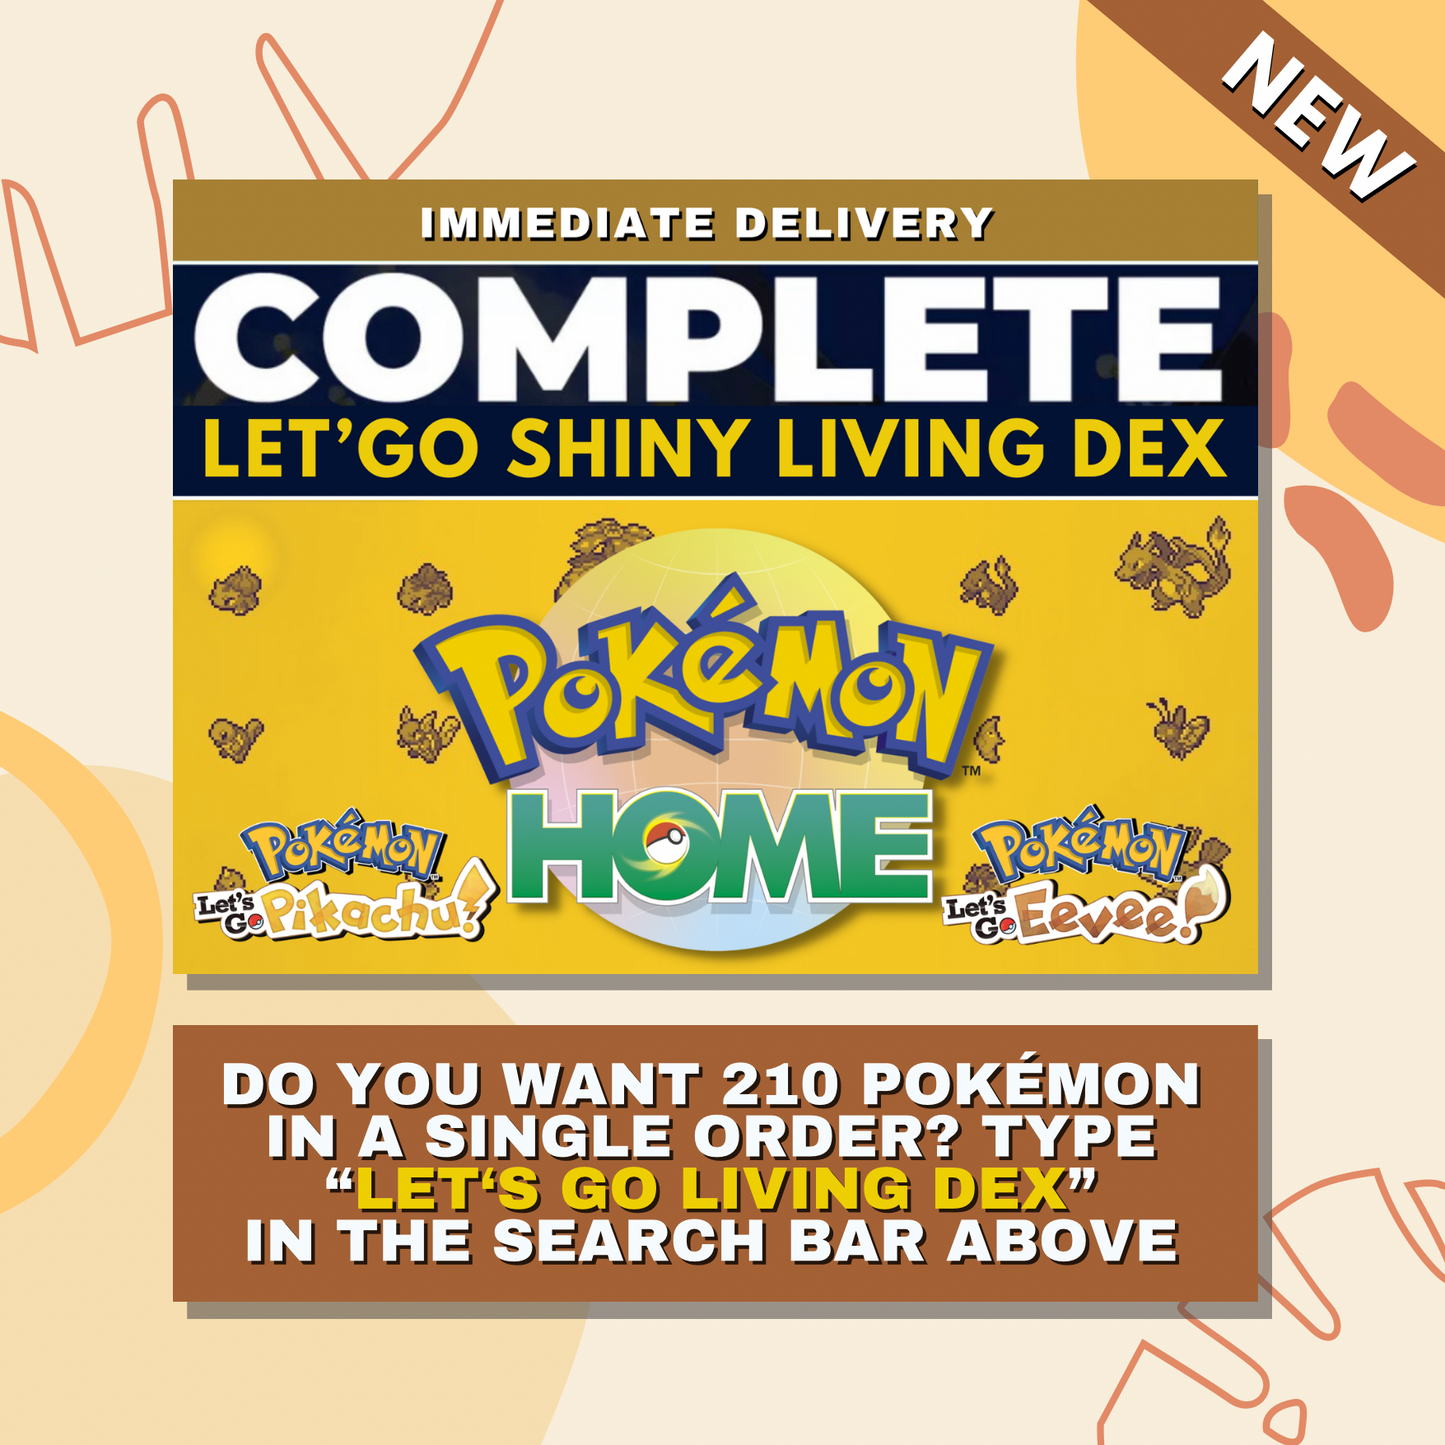 Marowak Shiny ✨ or Non Shiny Pokémon Let's Go Pikachu Eevee Level 100 Competitive Battle Ready 6 IV 100% Legit Legal Customizable Custom OT by Shiny Living Dex | Shiny Living Dex